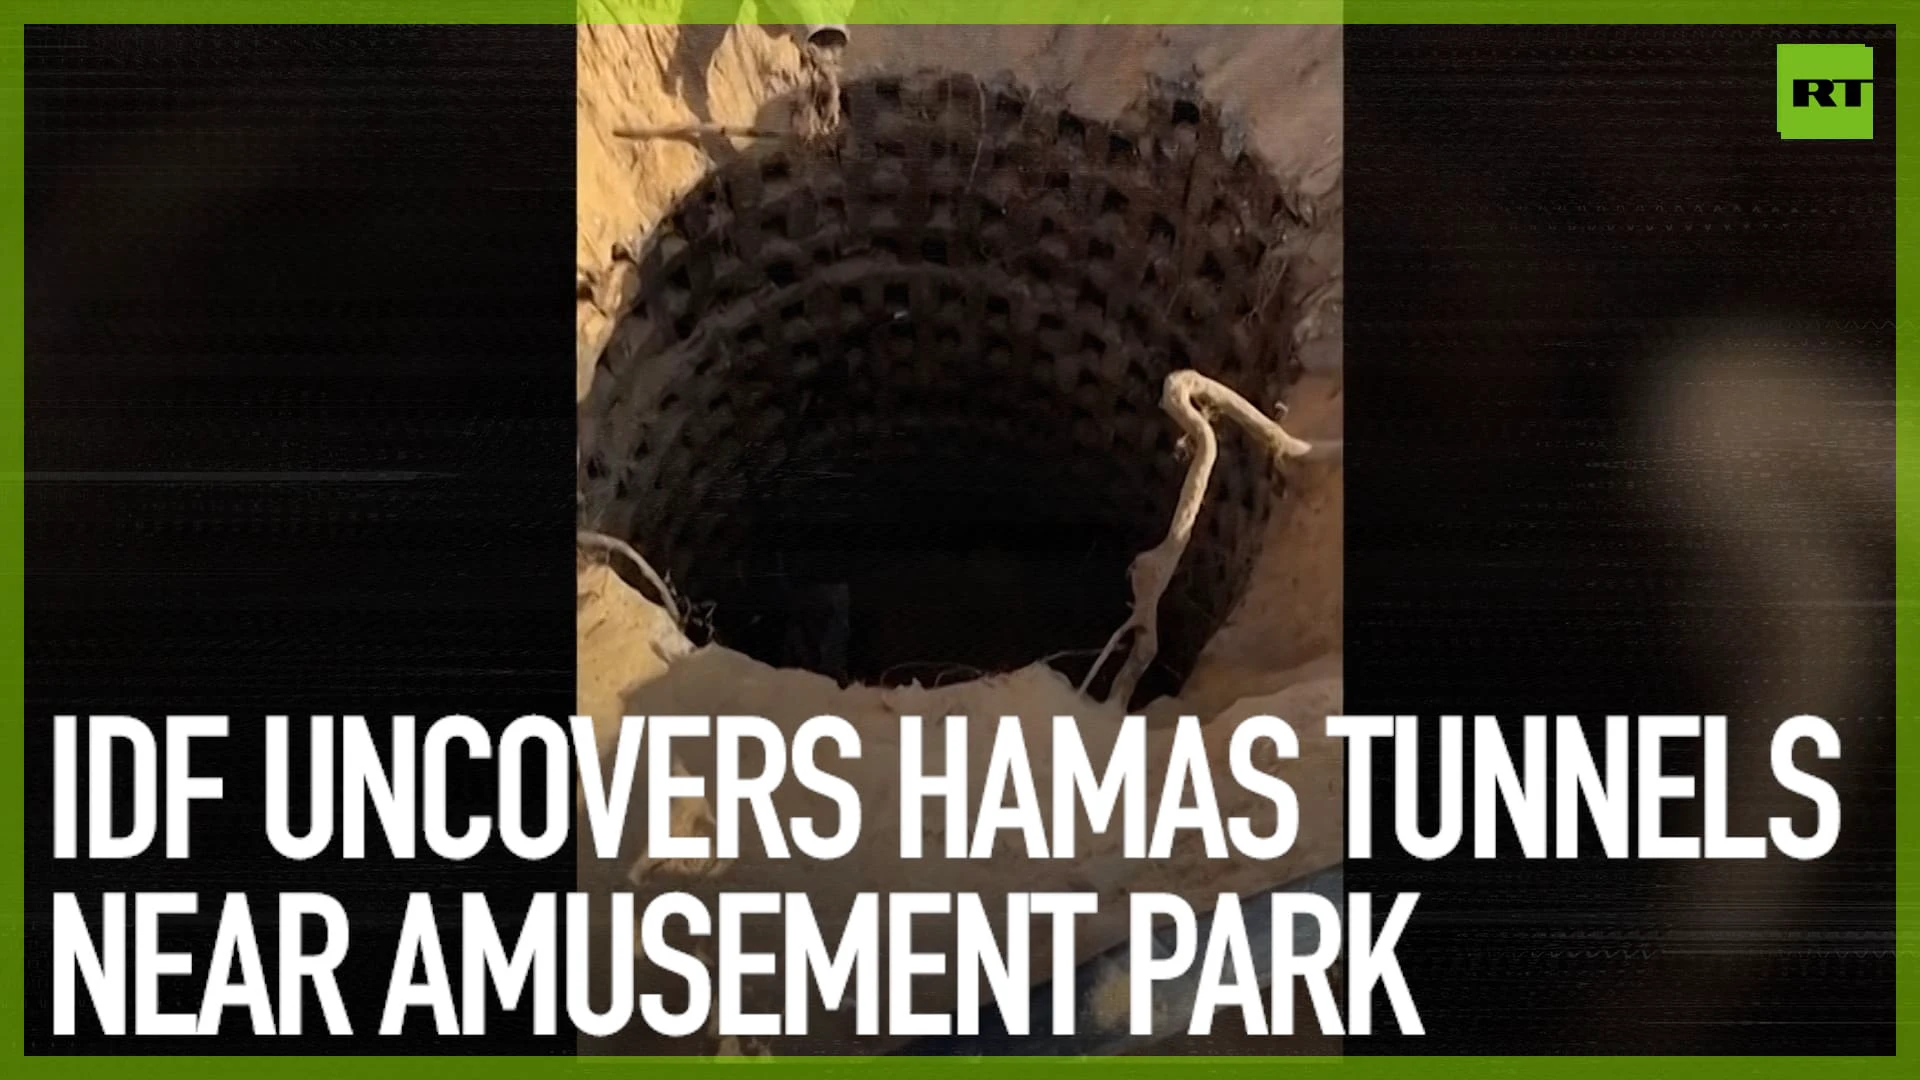 IDF uncovers Hamas tunnels near amusement park